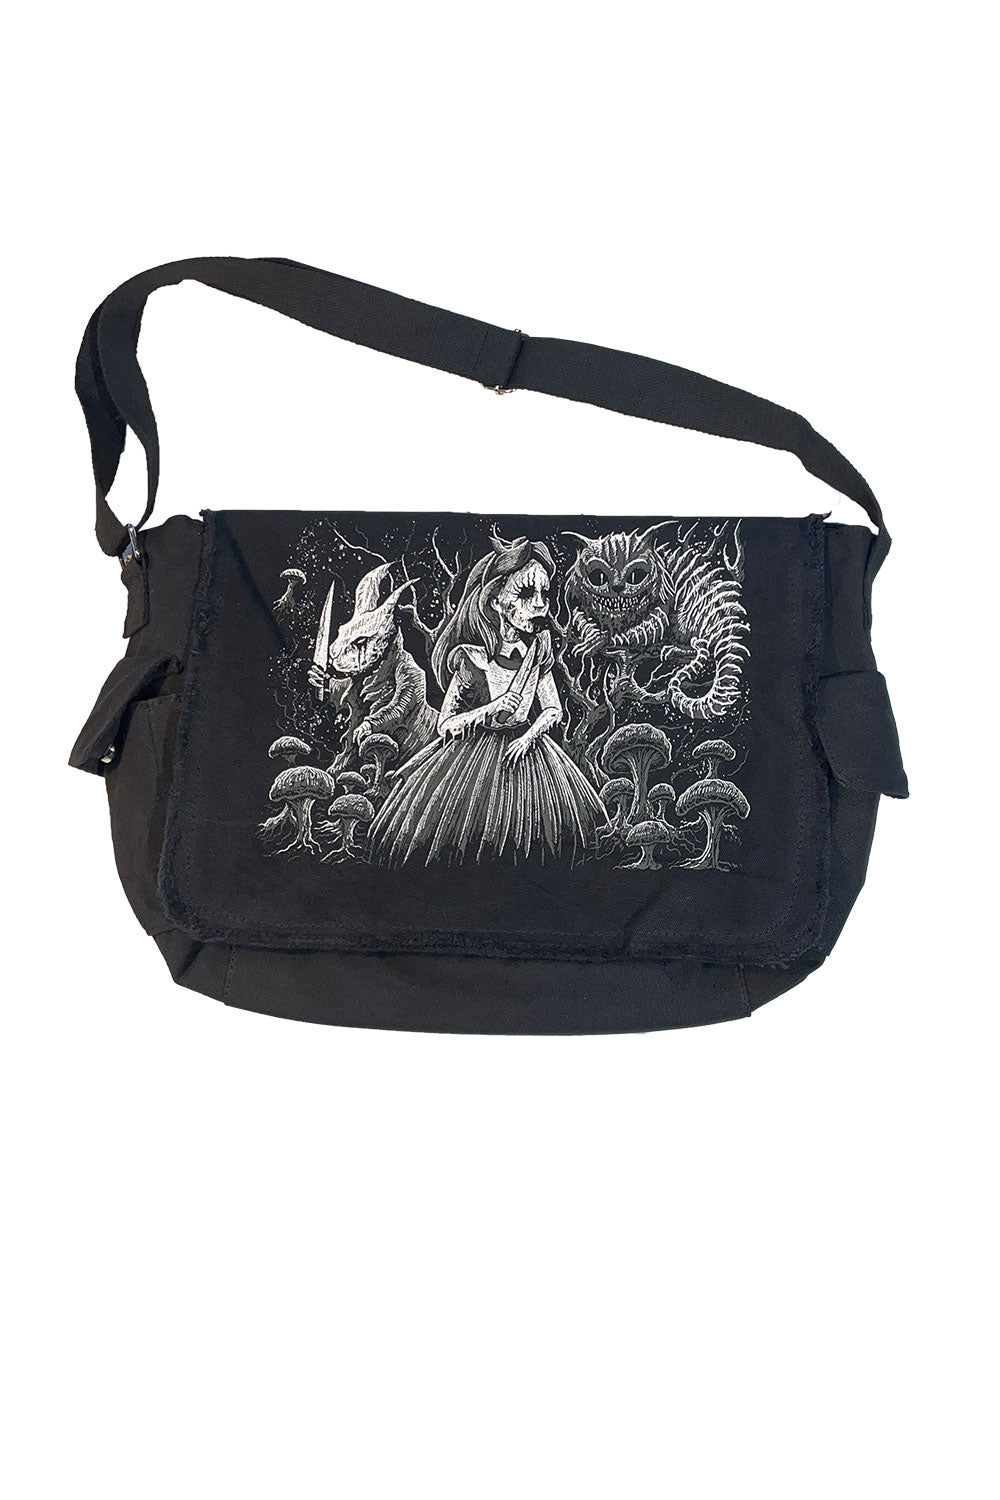 grunge gothic messenger bag